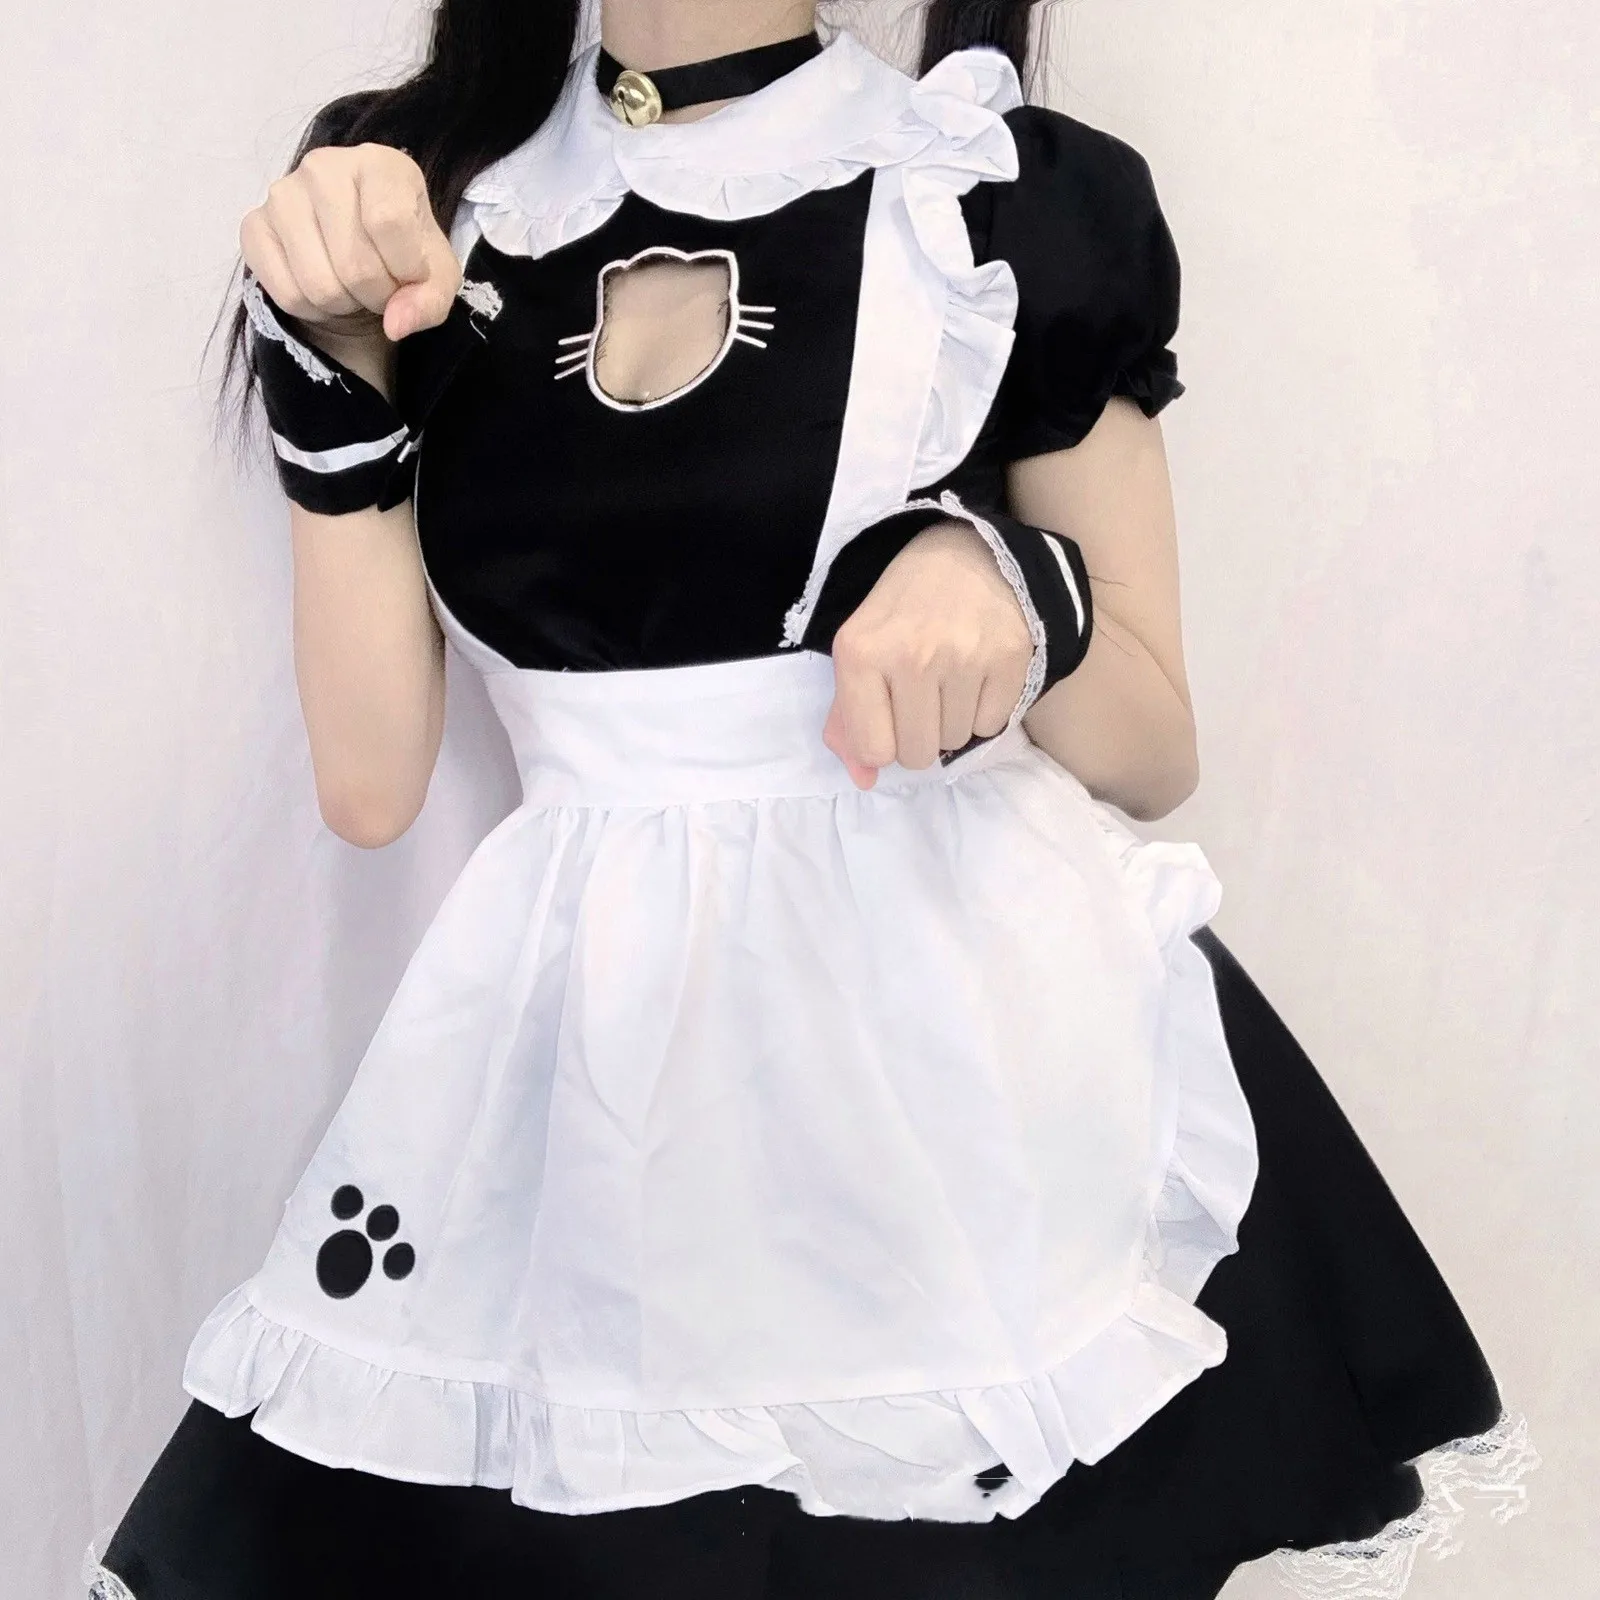 Panda Dress Ruffle Dress Black White Bow Dress Black Cute Apron Maid Uniform Long Sleeve Dress School Dress For Girls Lolita Dress